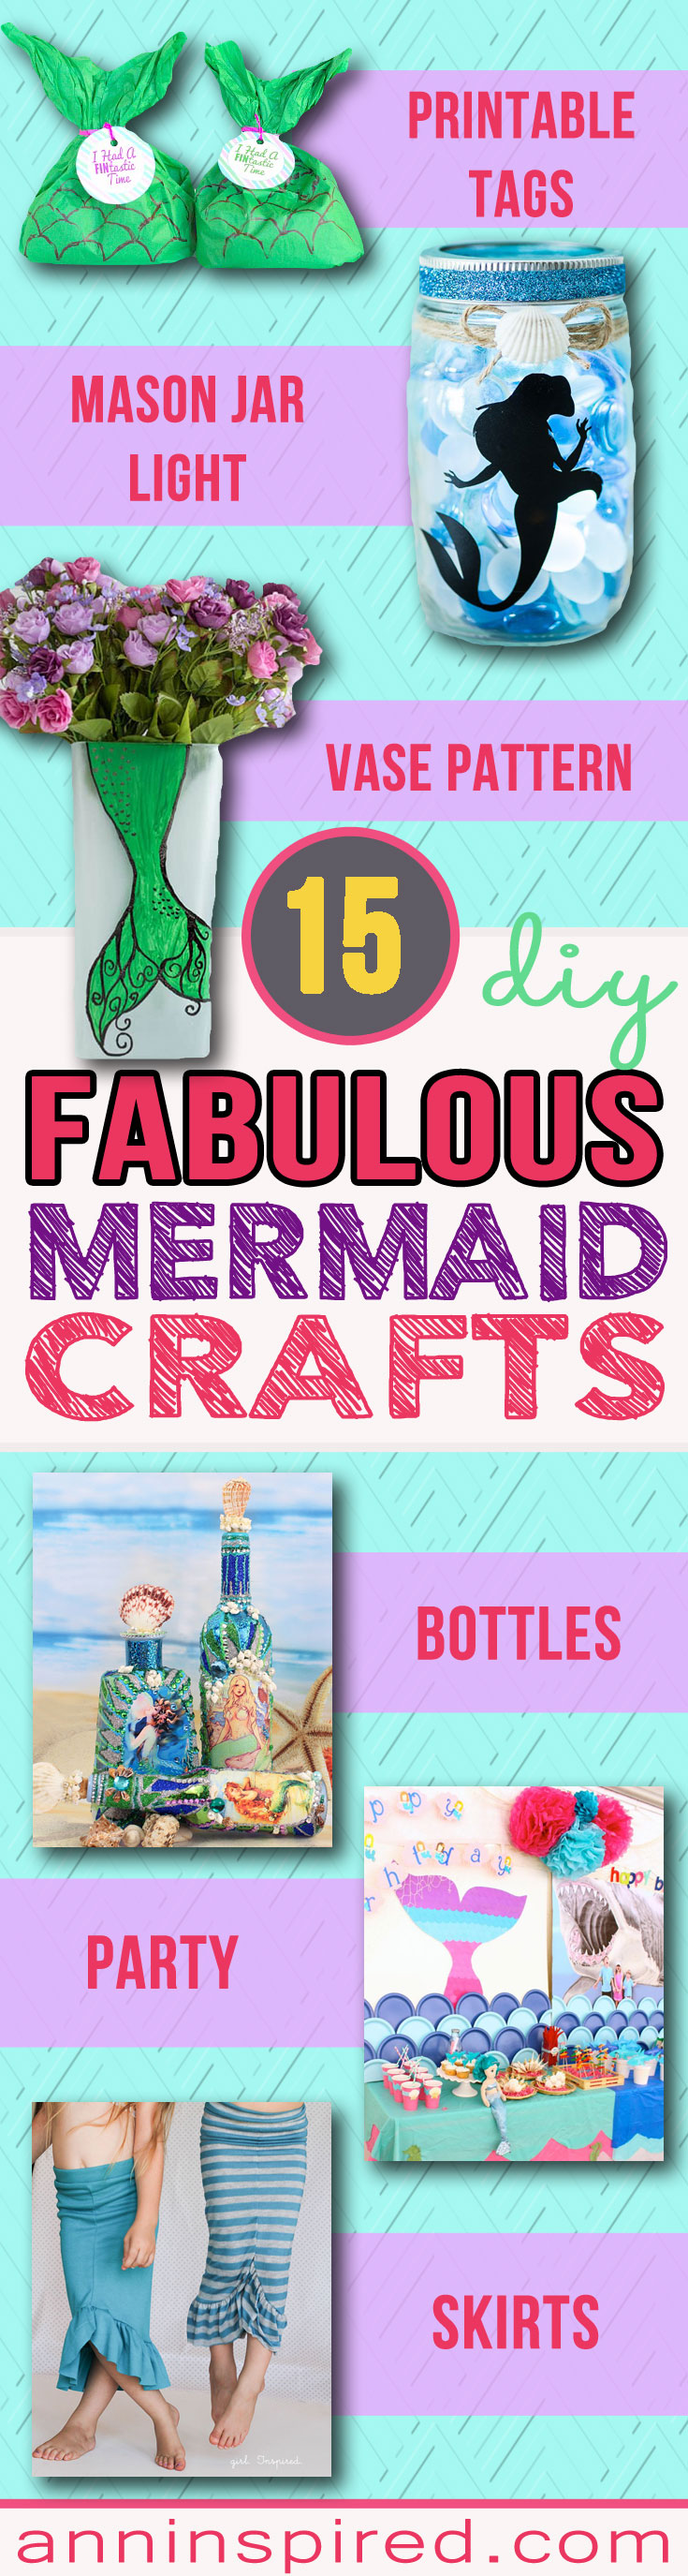 15 Fabulous DIY Mermaid Crafts